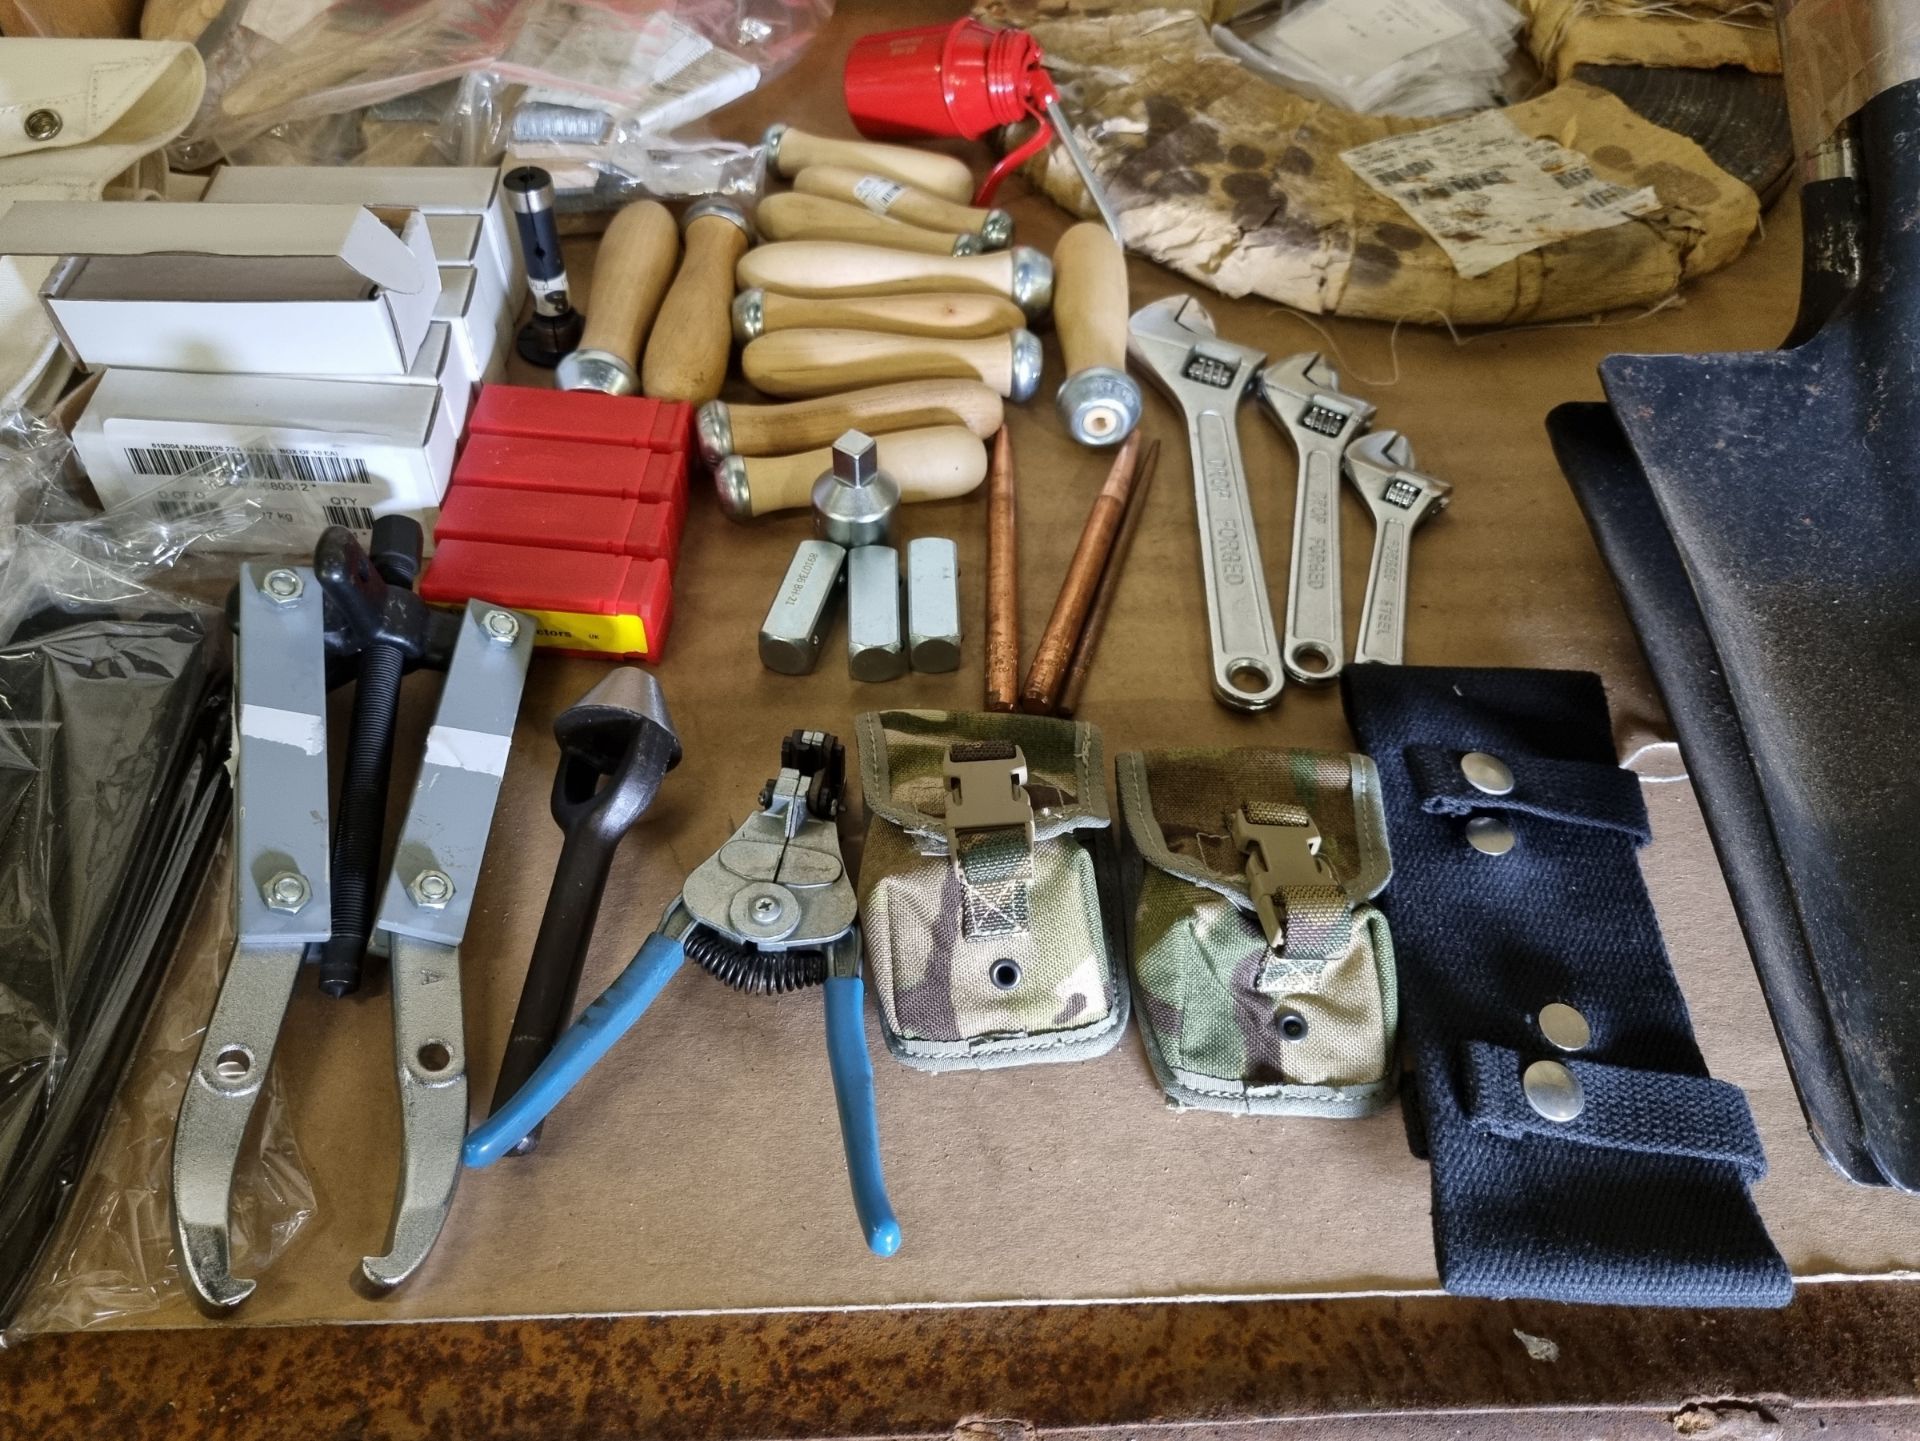 Workshop tools and equipment - shovels, sockets, file handles, adjustable spanners, - Image 3 of 8